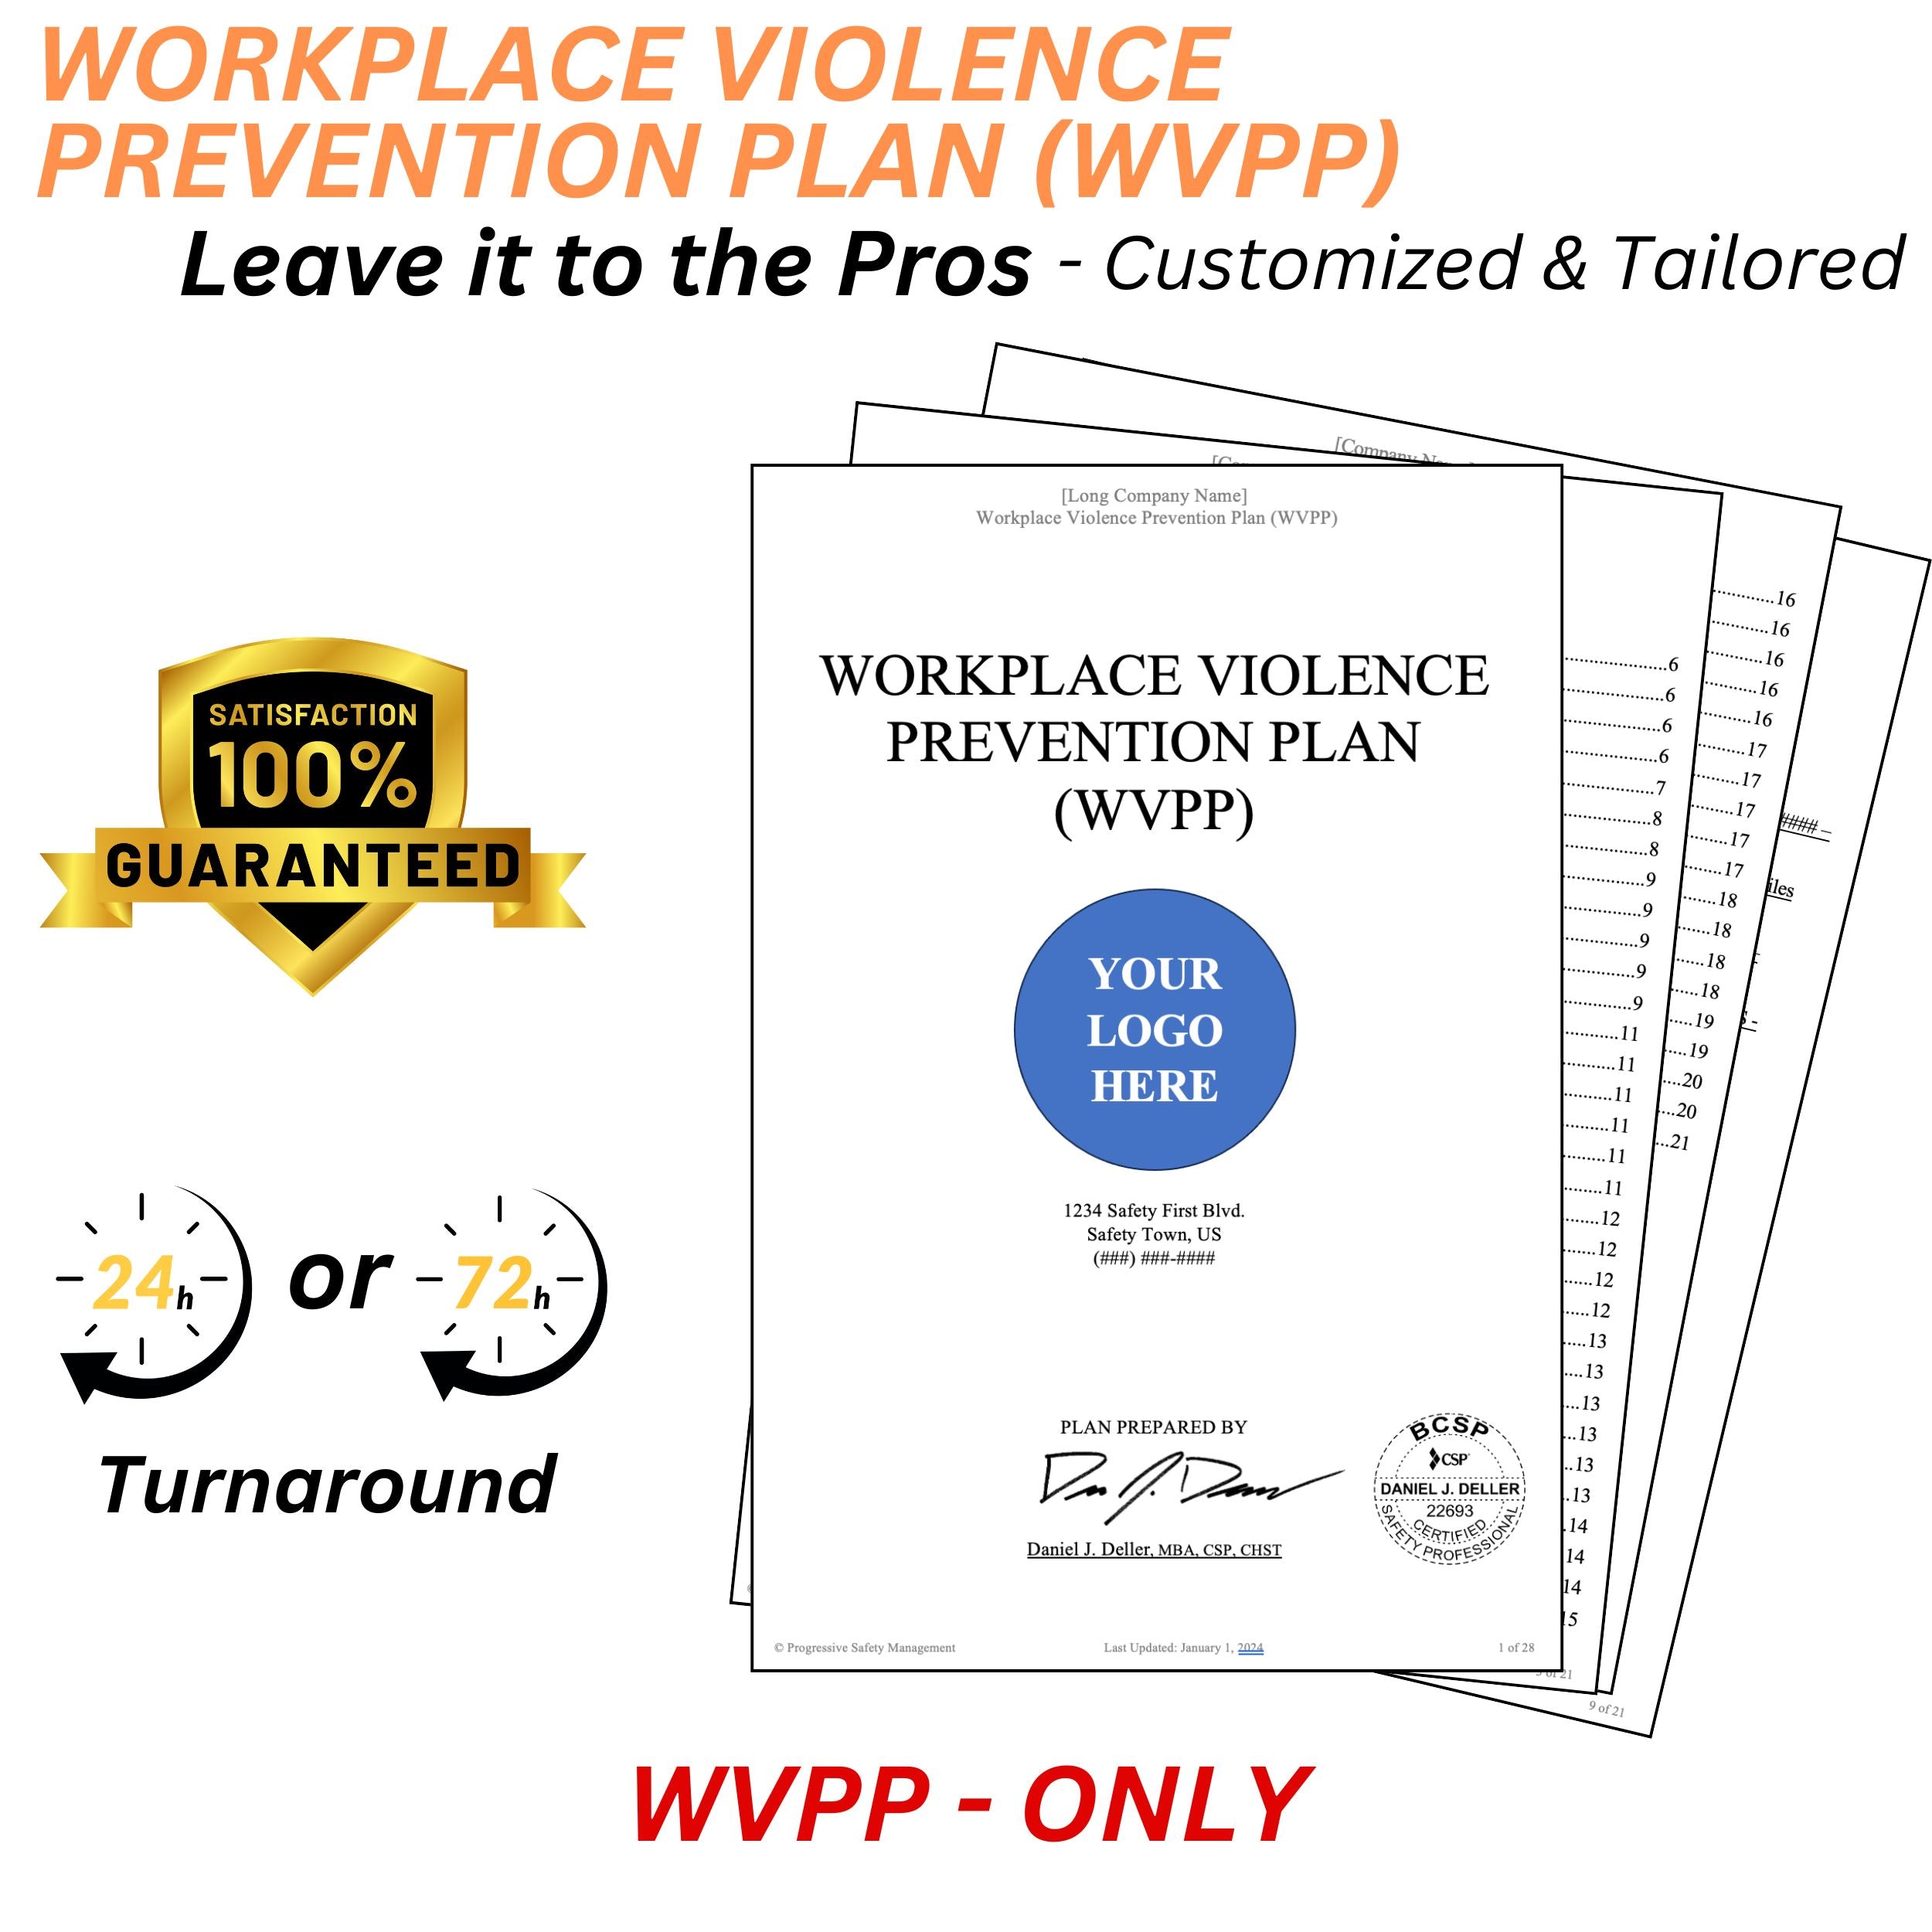 WVPP - Workplace Violence Prevention Program